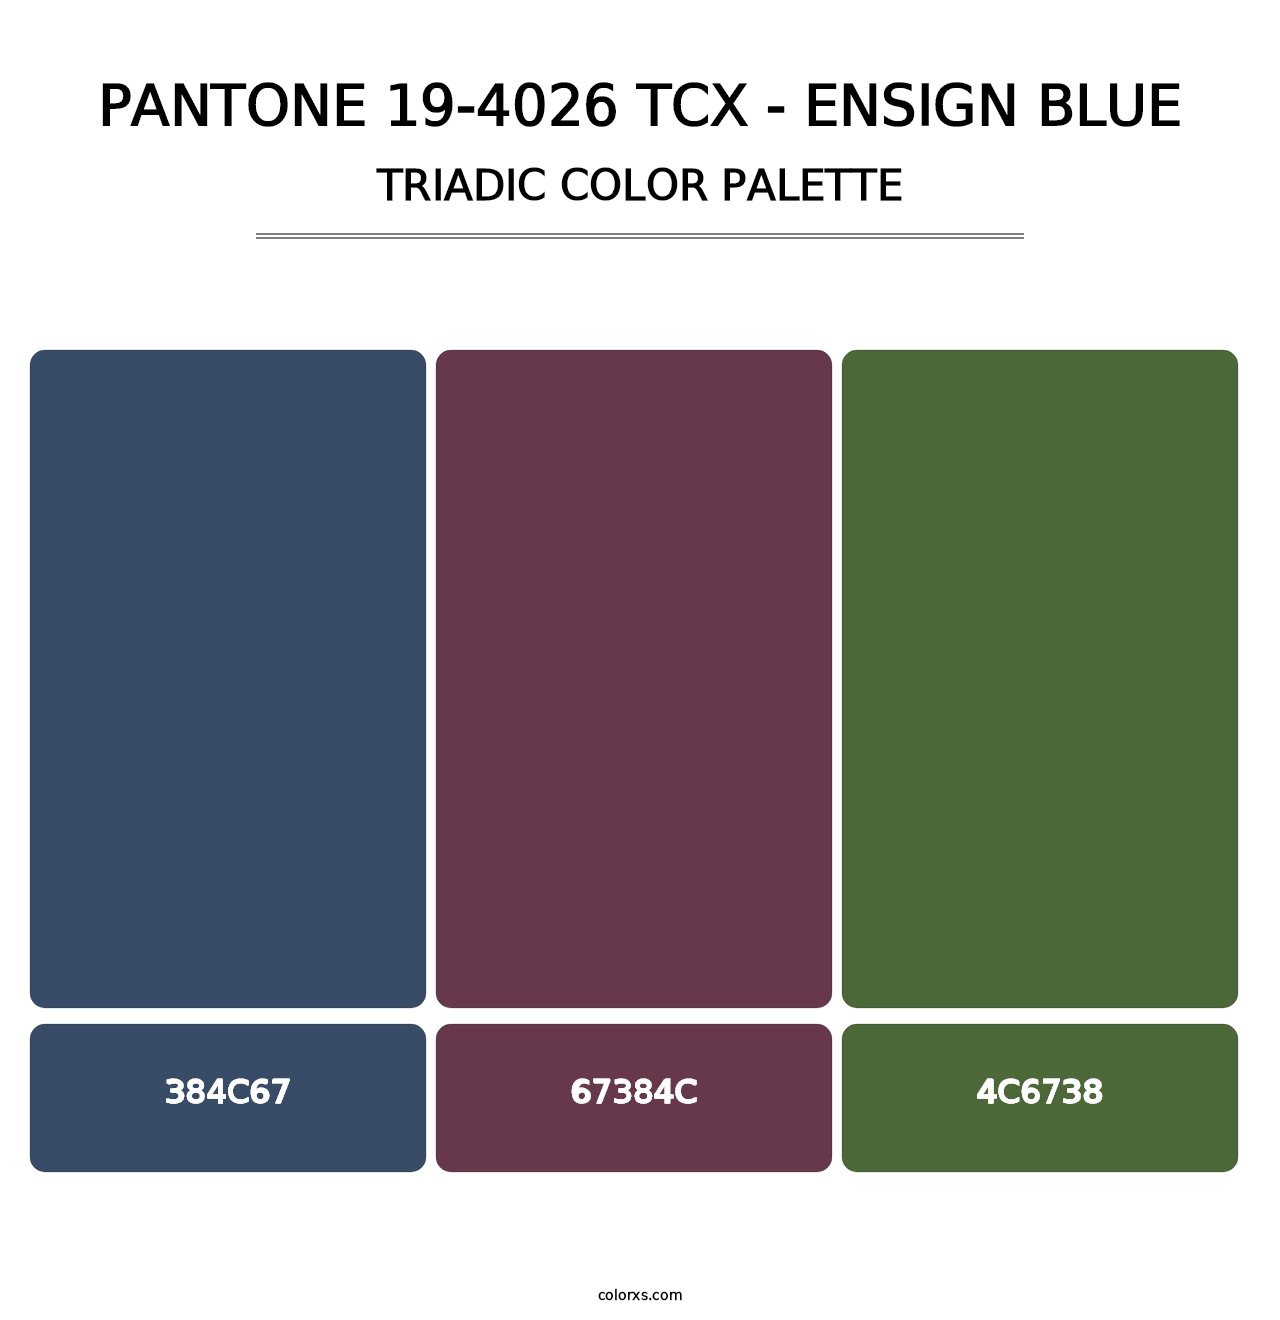 PANTONE 19-4026 TCX - Ensign Blue - Triadic Color Palette